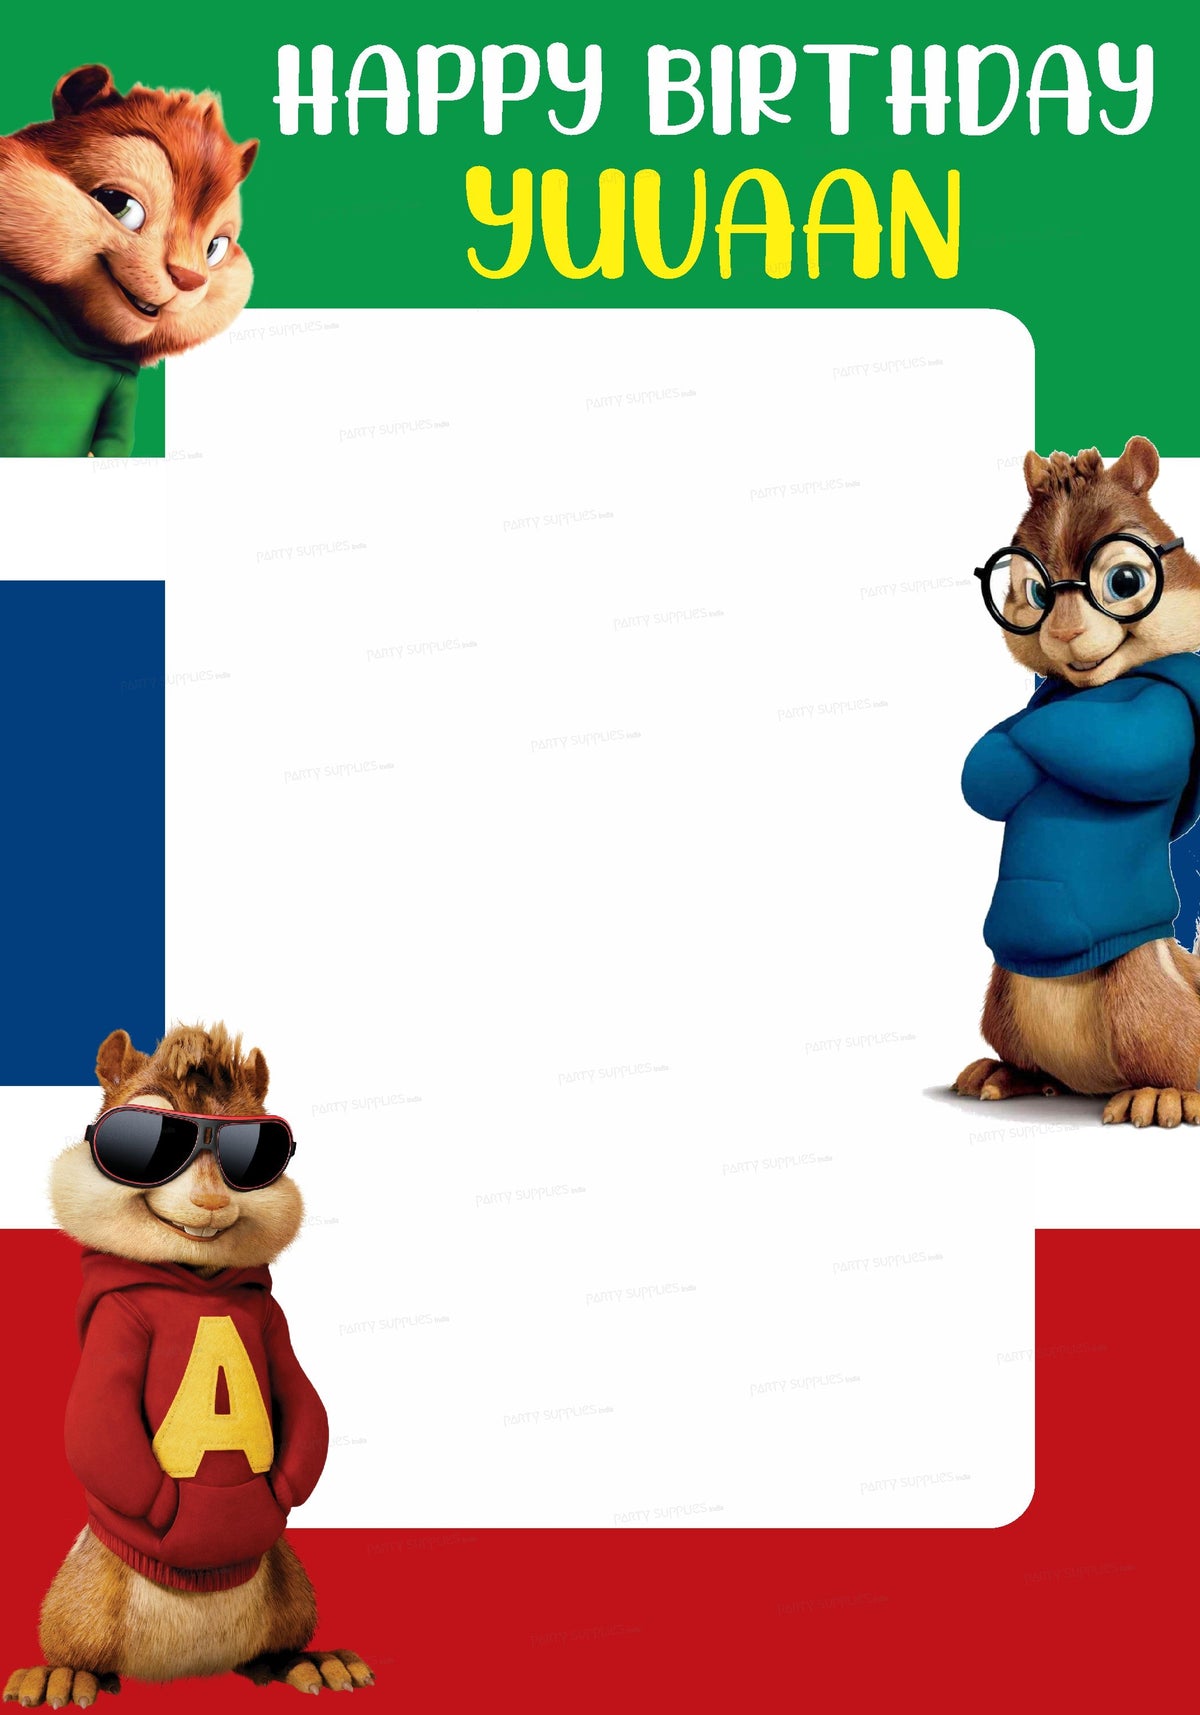 PSI Alvin and Chipmunks Theme Customized PhotoBooth